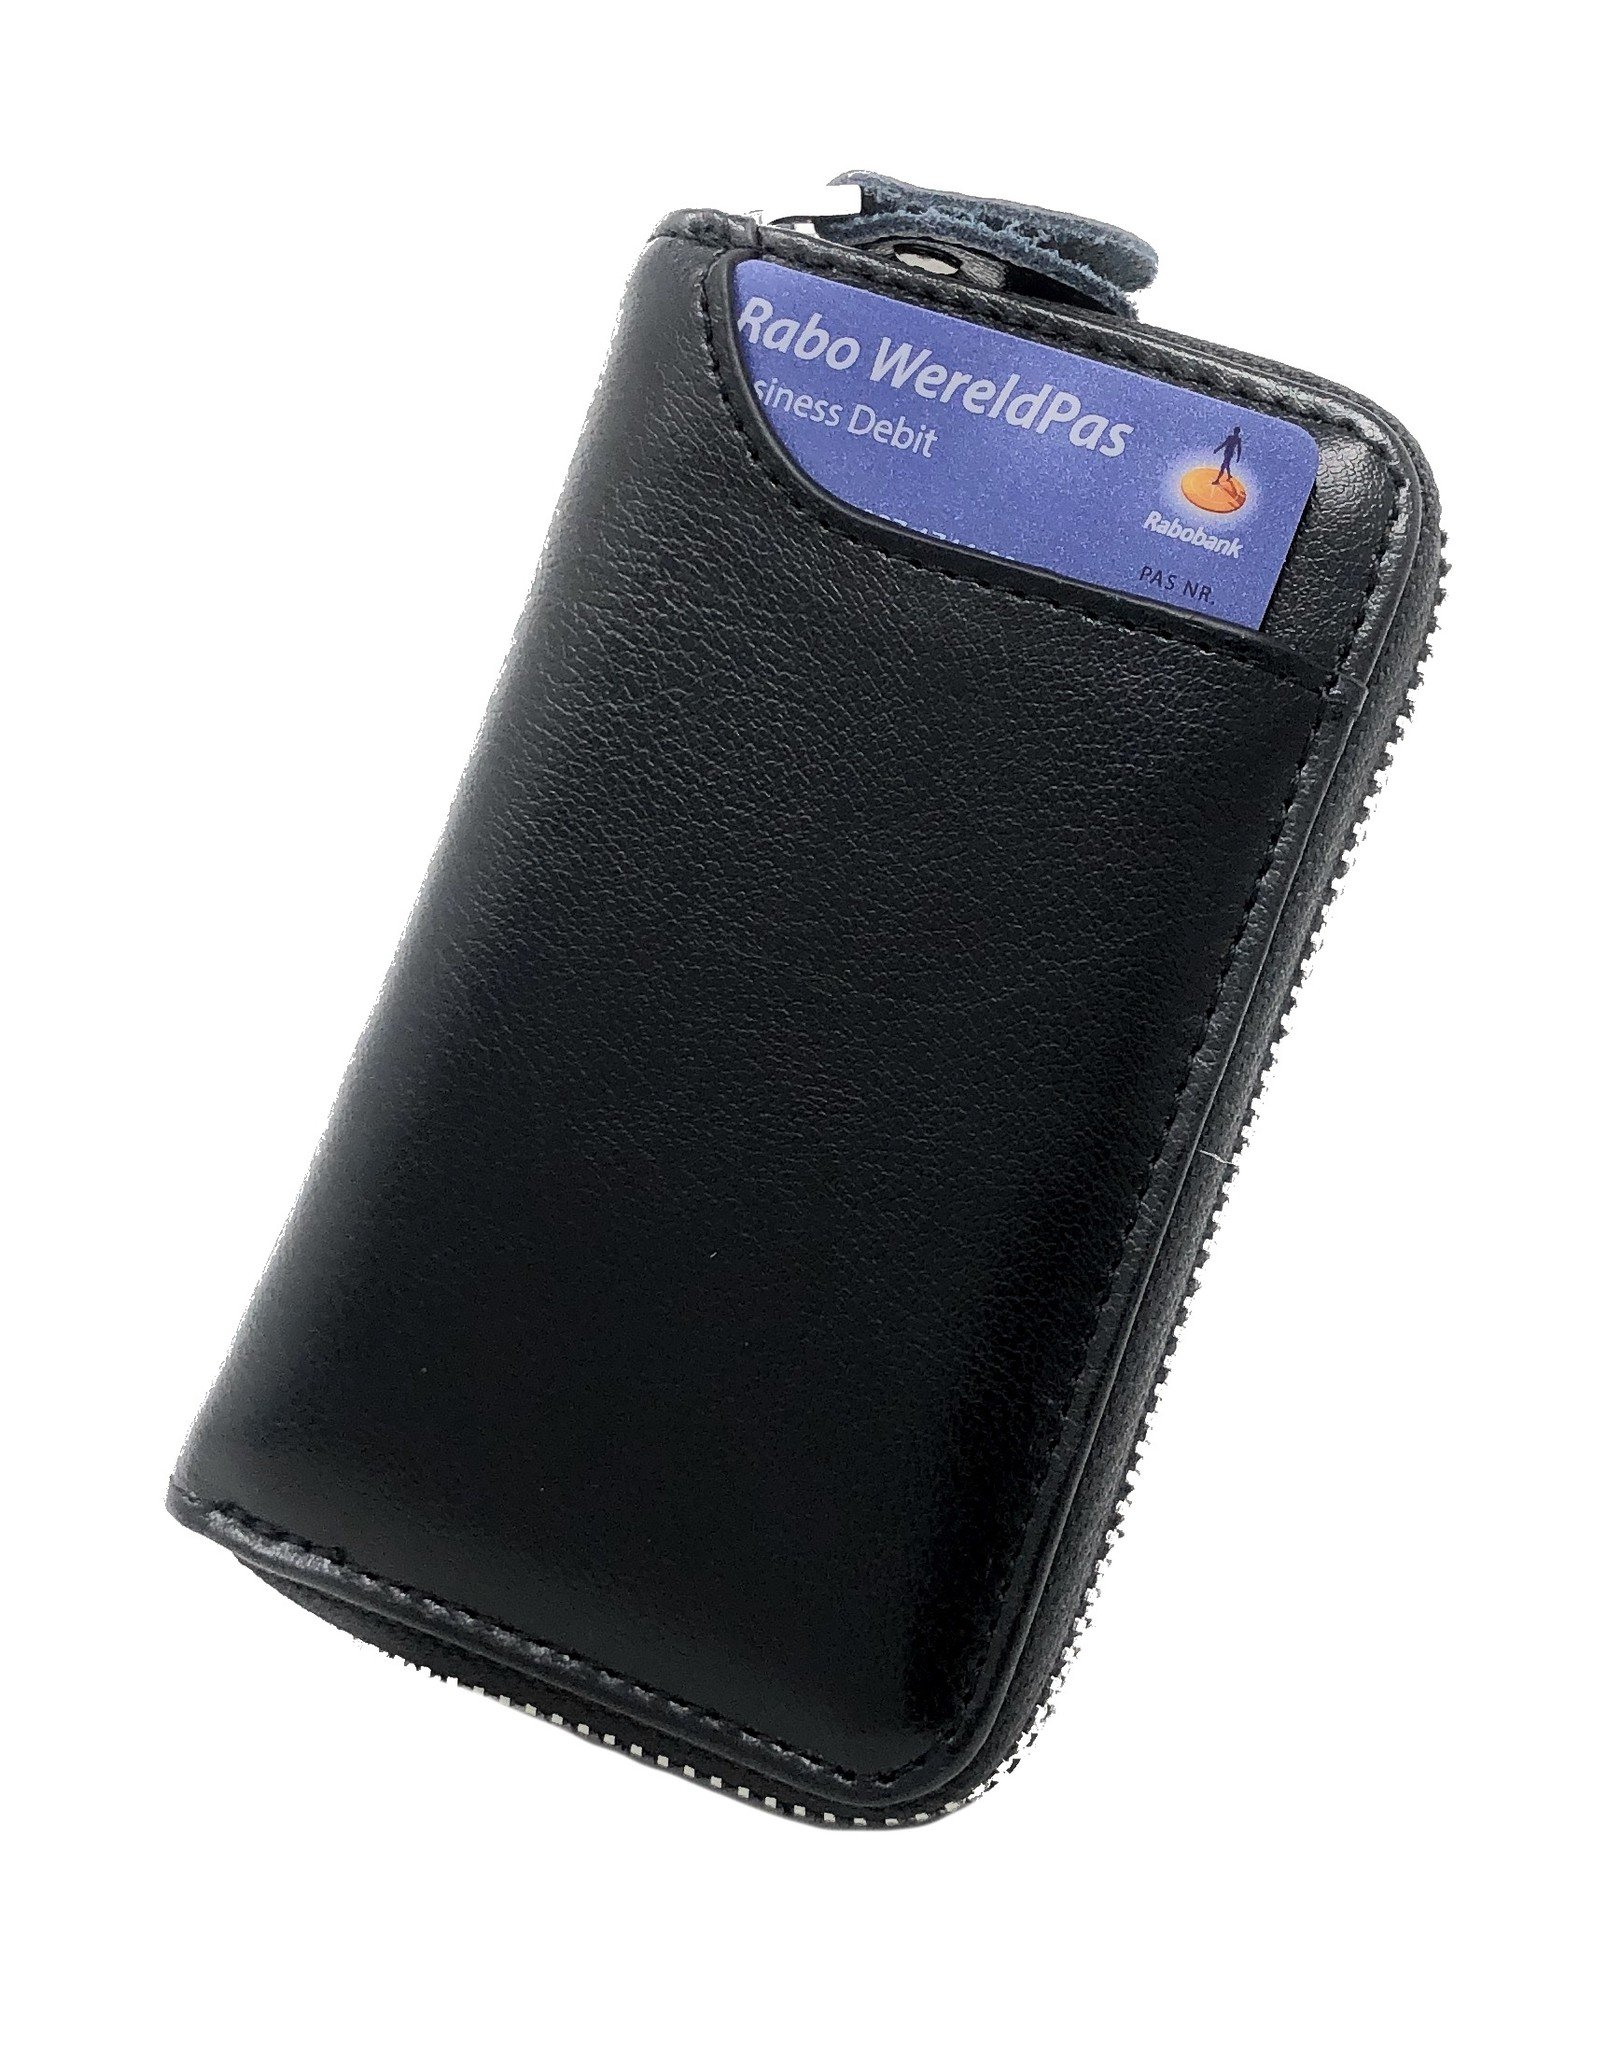 Leather Key Case, 6 Key Hooks, Card Holder, Bank Notes Wallet, Car Key Pocket, Multifunctional Key Organizer - Black-3